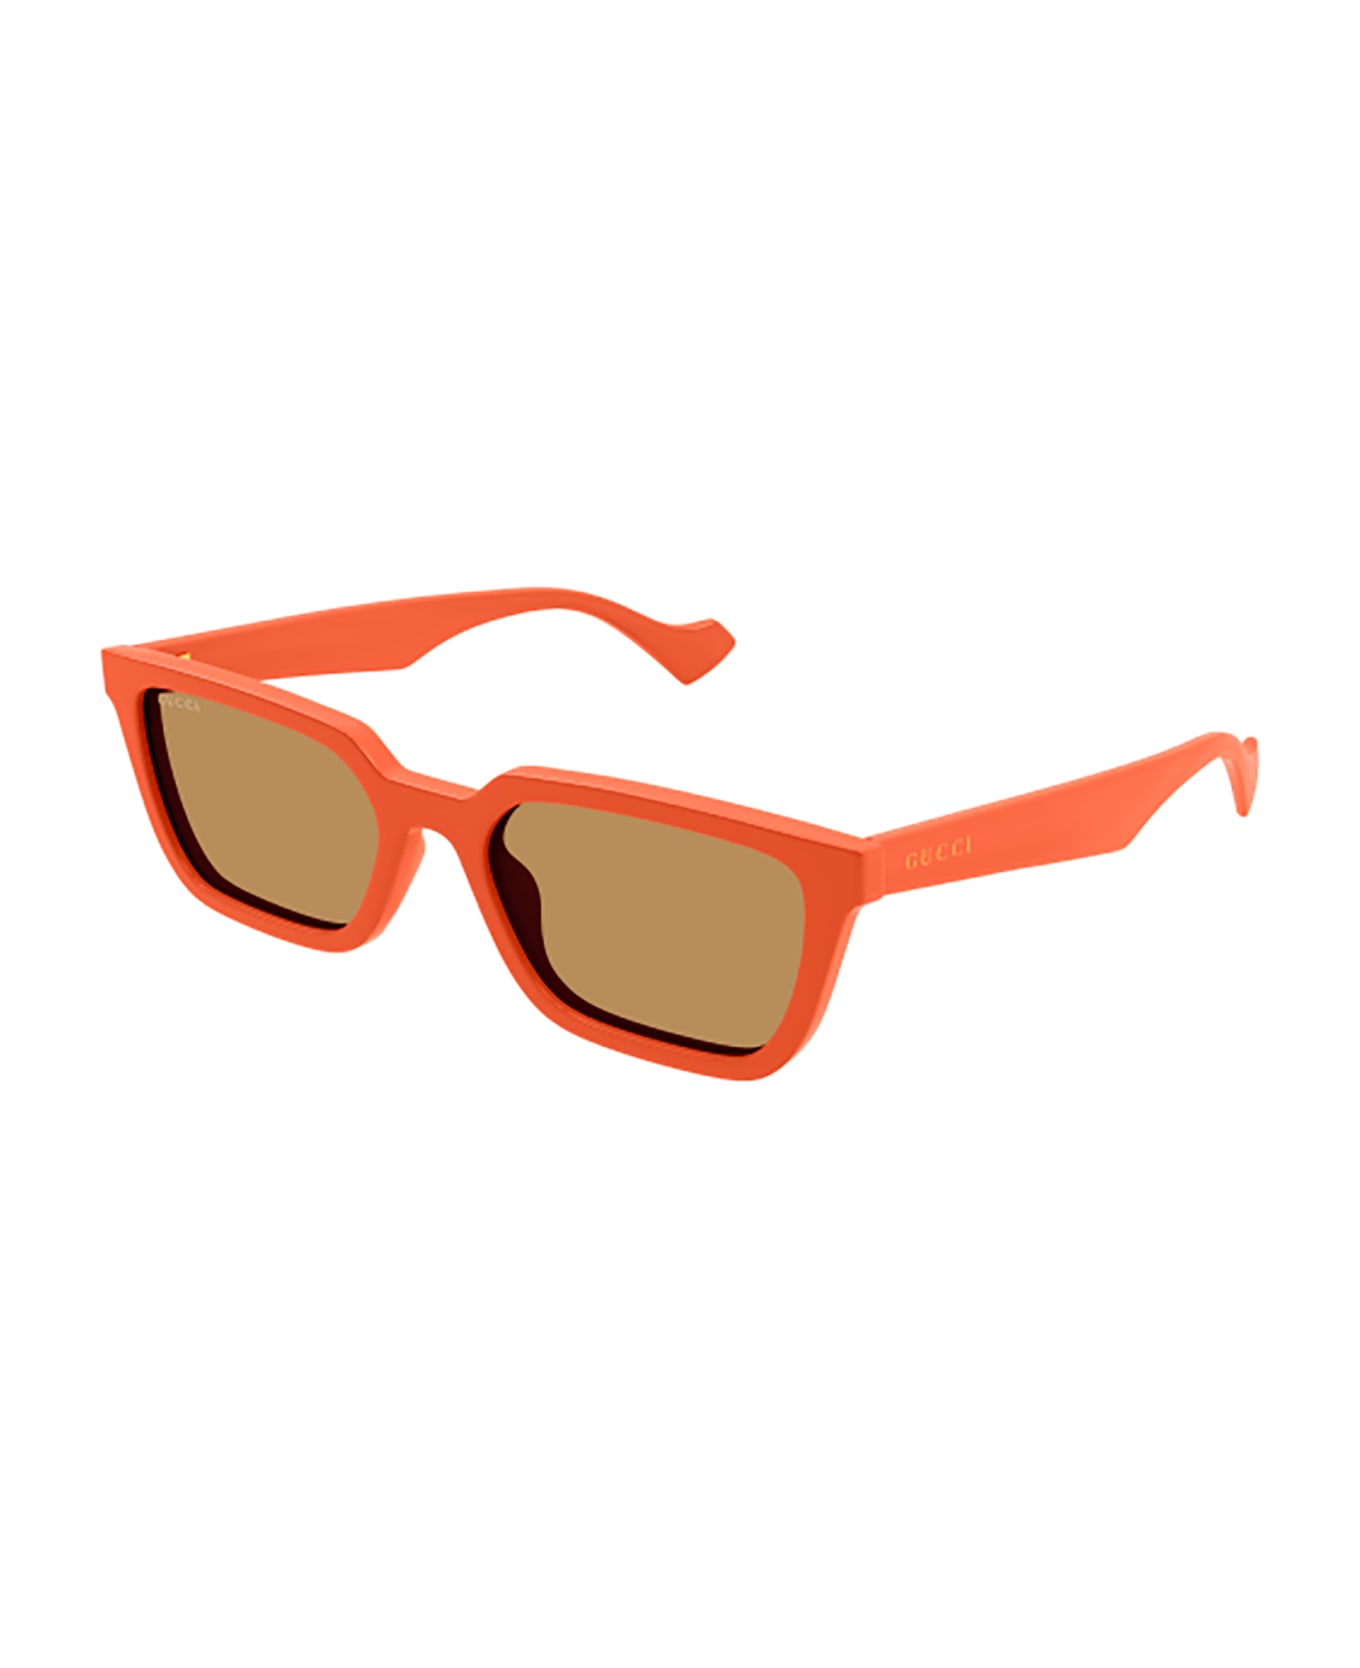 Gucci Eyewear GG1539S Sunglasses - Orange Orange Brown